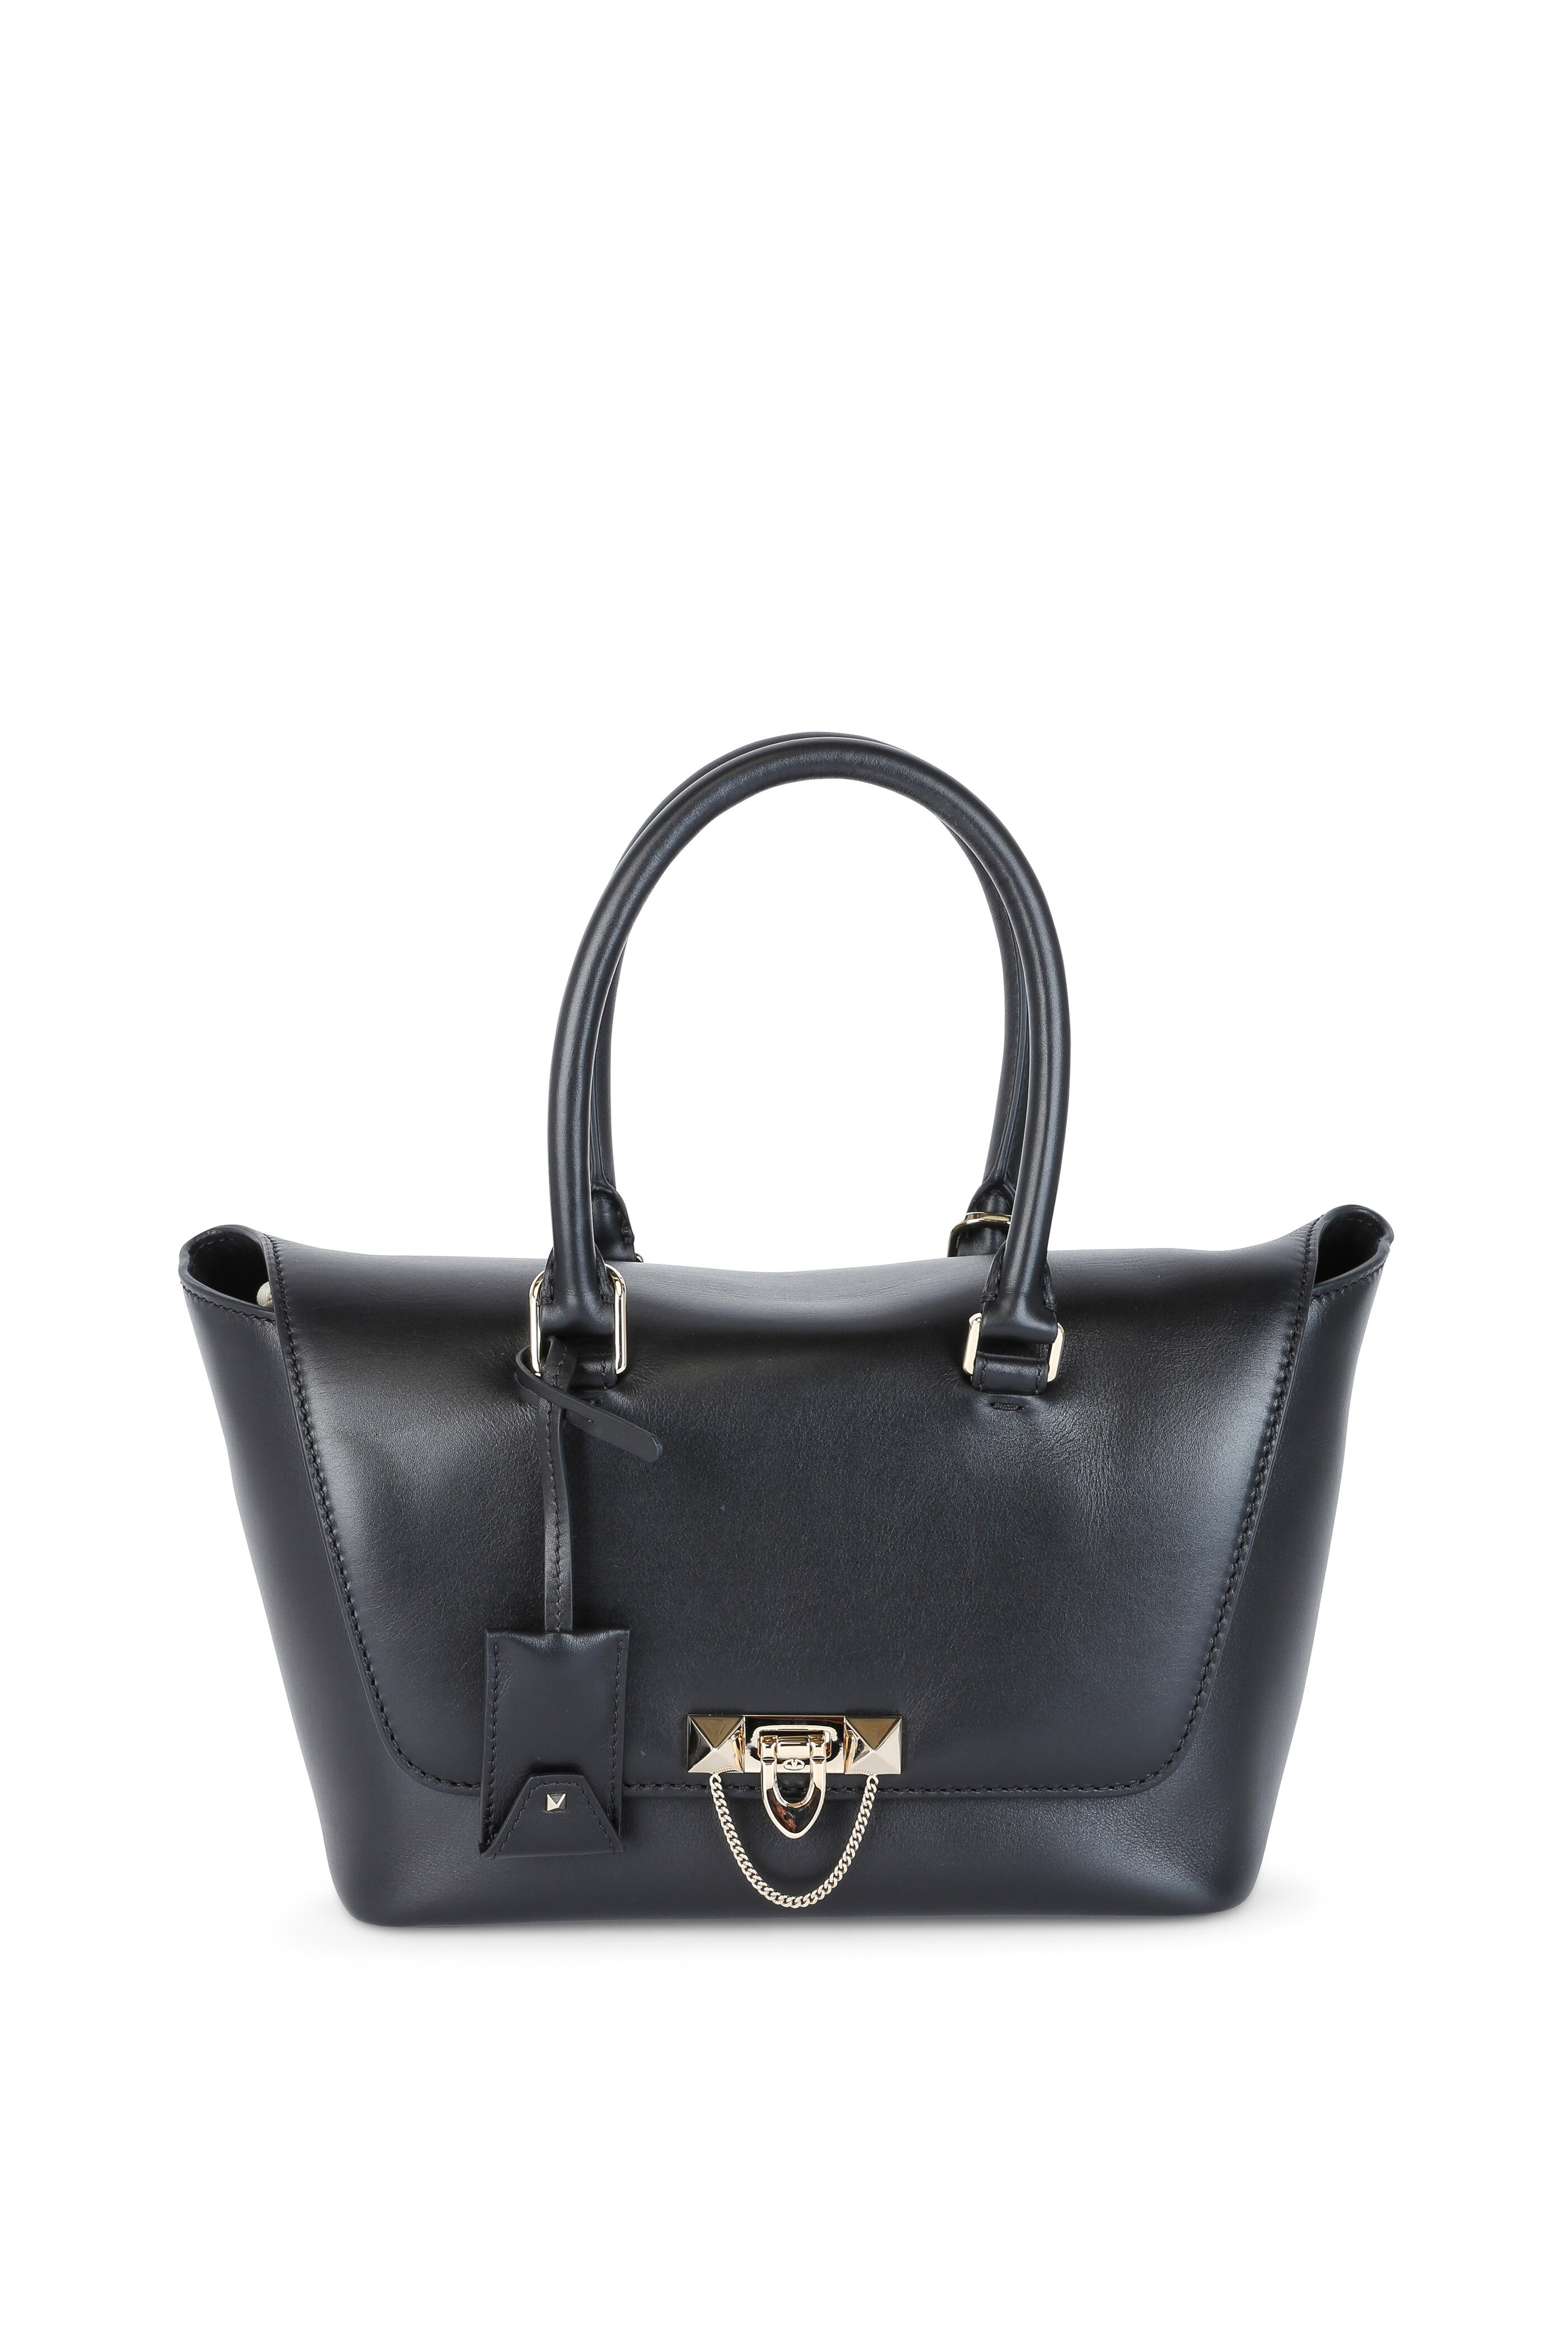 Valentino - Demilune Black Leather Handle Bag